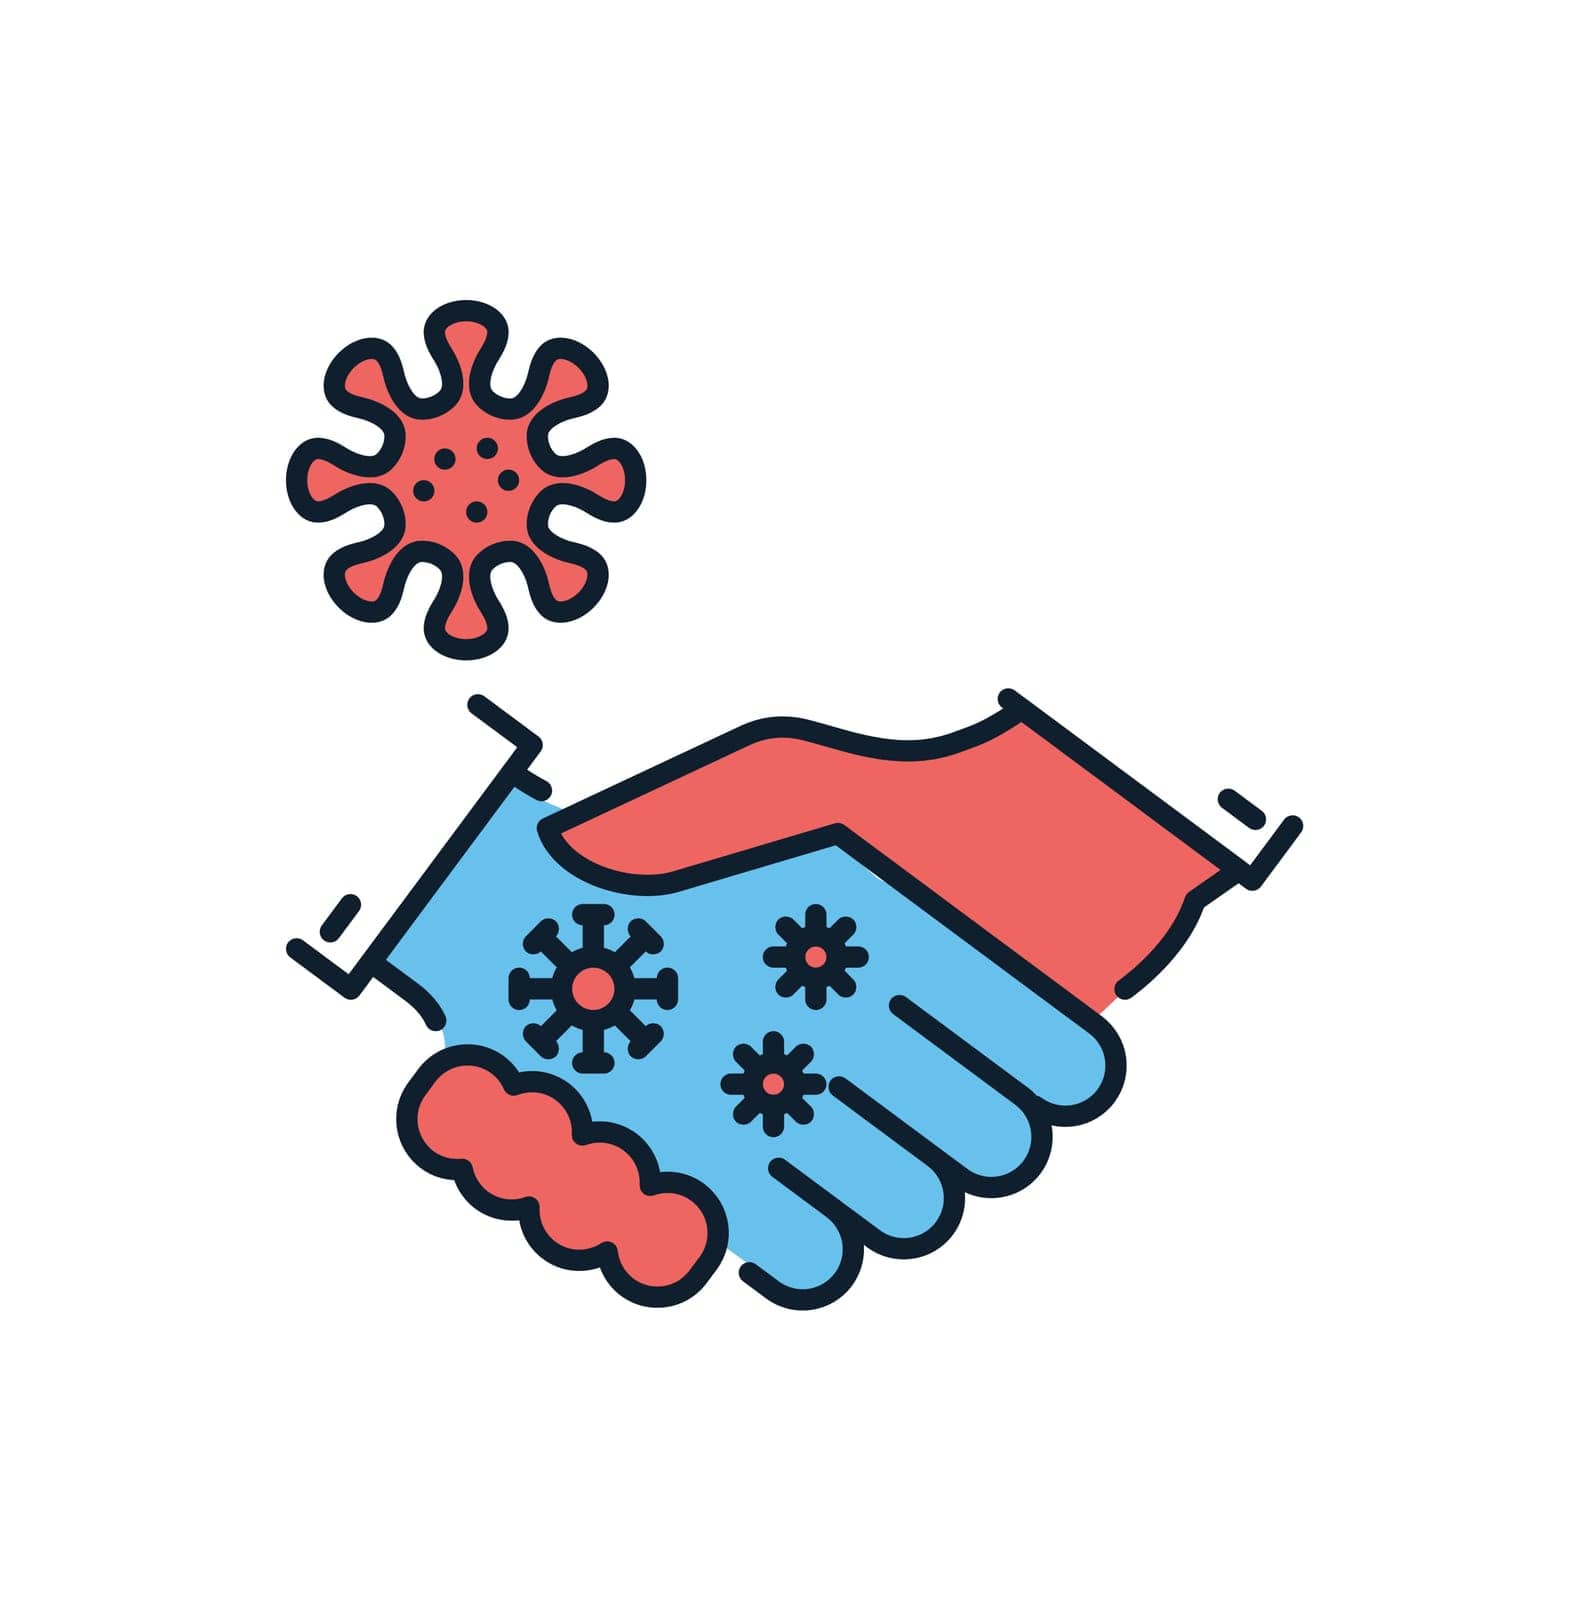 Handshake virus transmission vector icon. by smoki